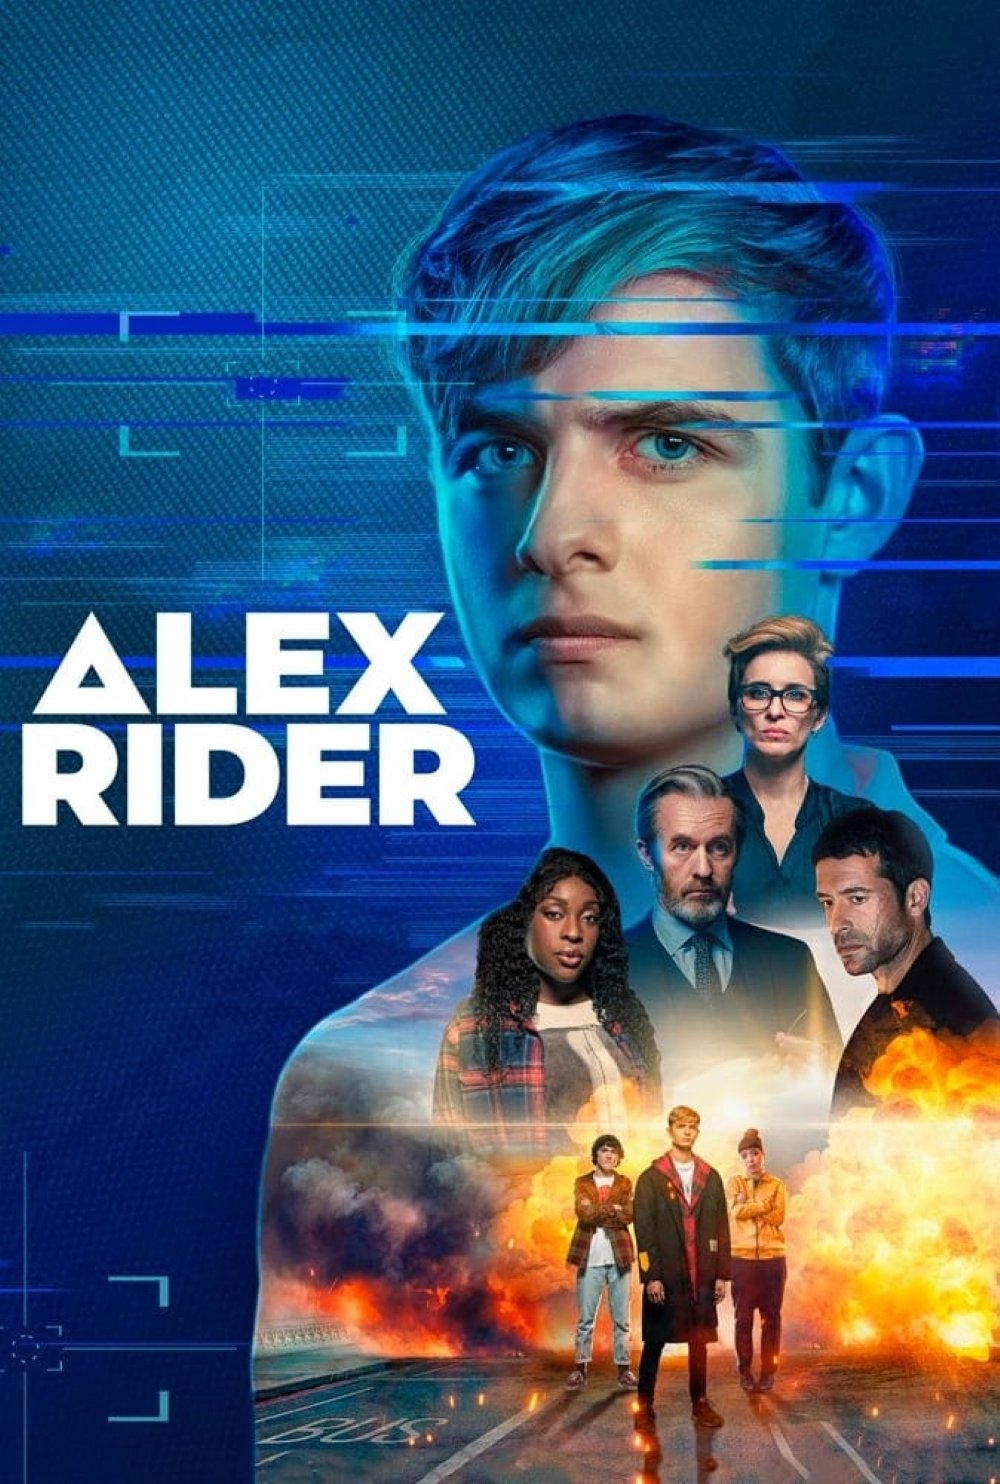 Plakát pro film “Alex Rider”